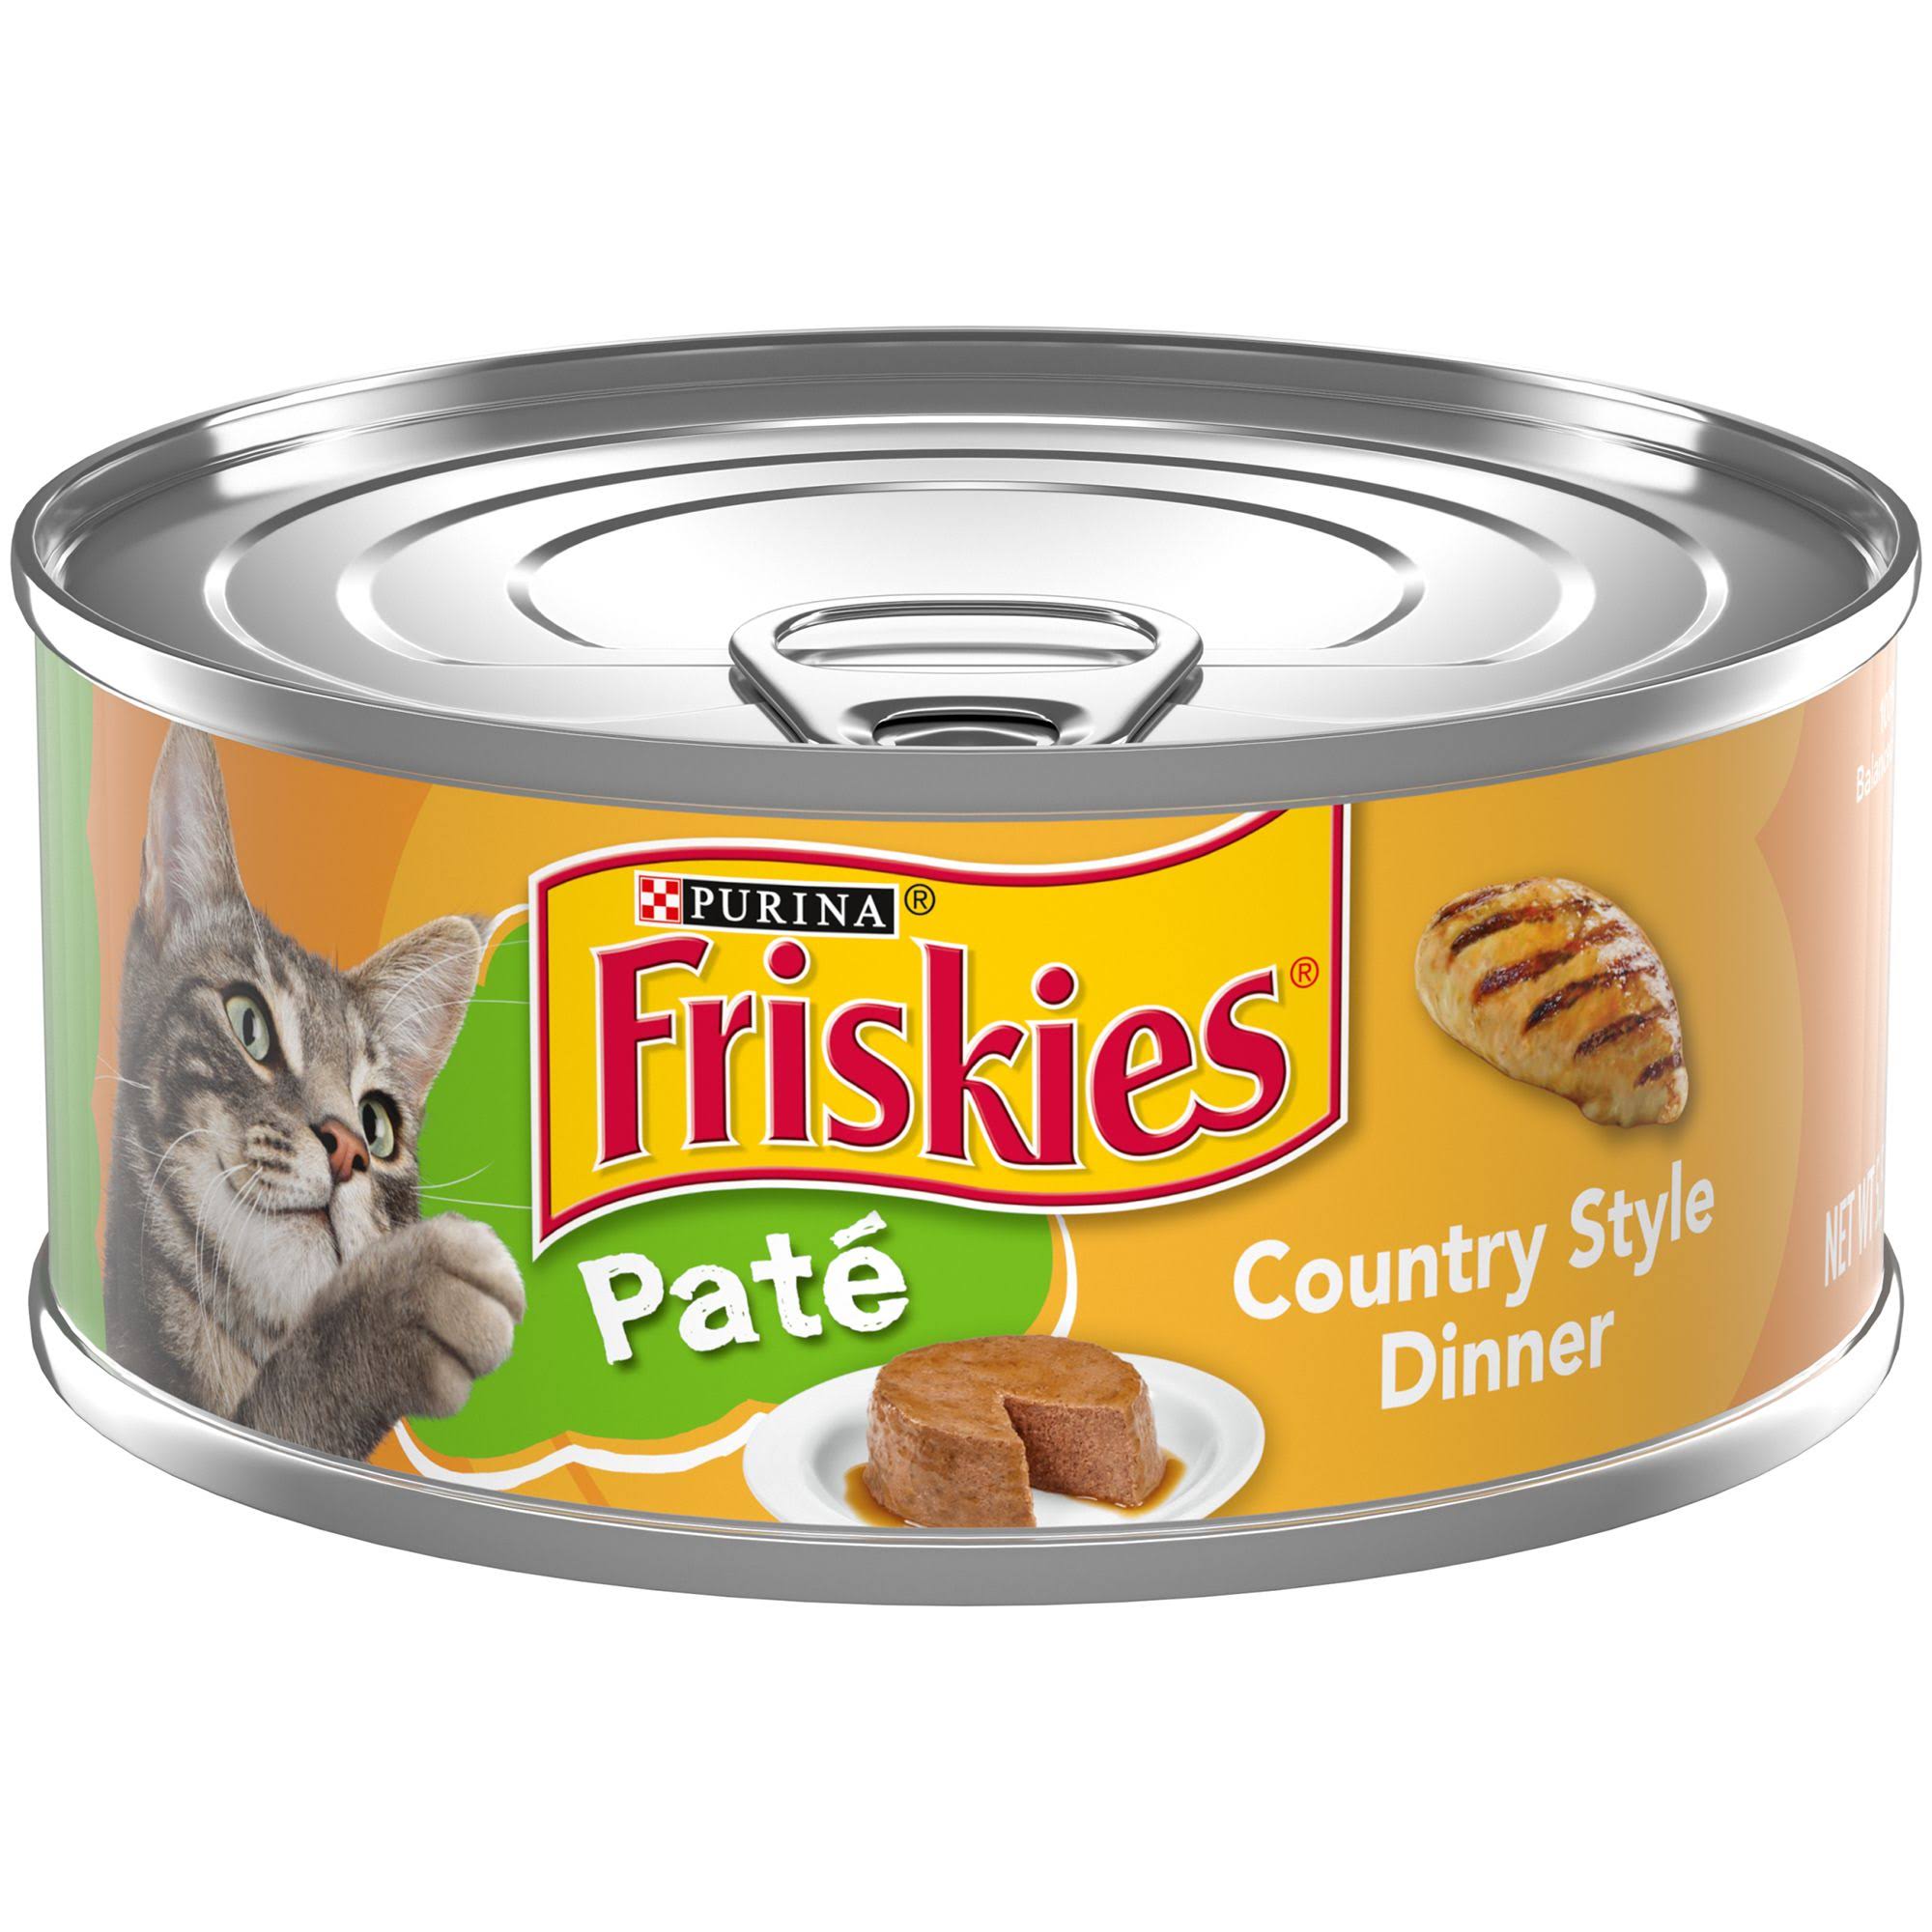 Purina Friskies Classic Paté Cat Food - Country Style Dinner, 5.5oz